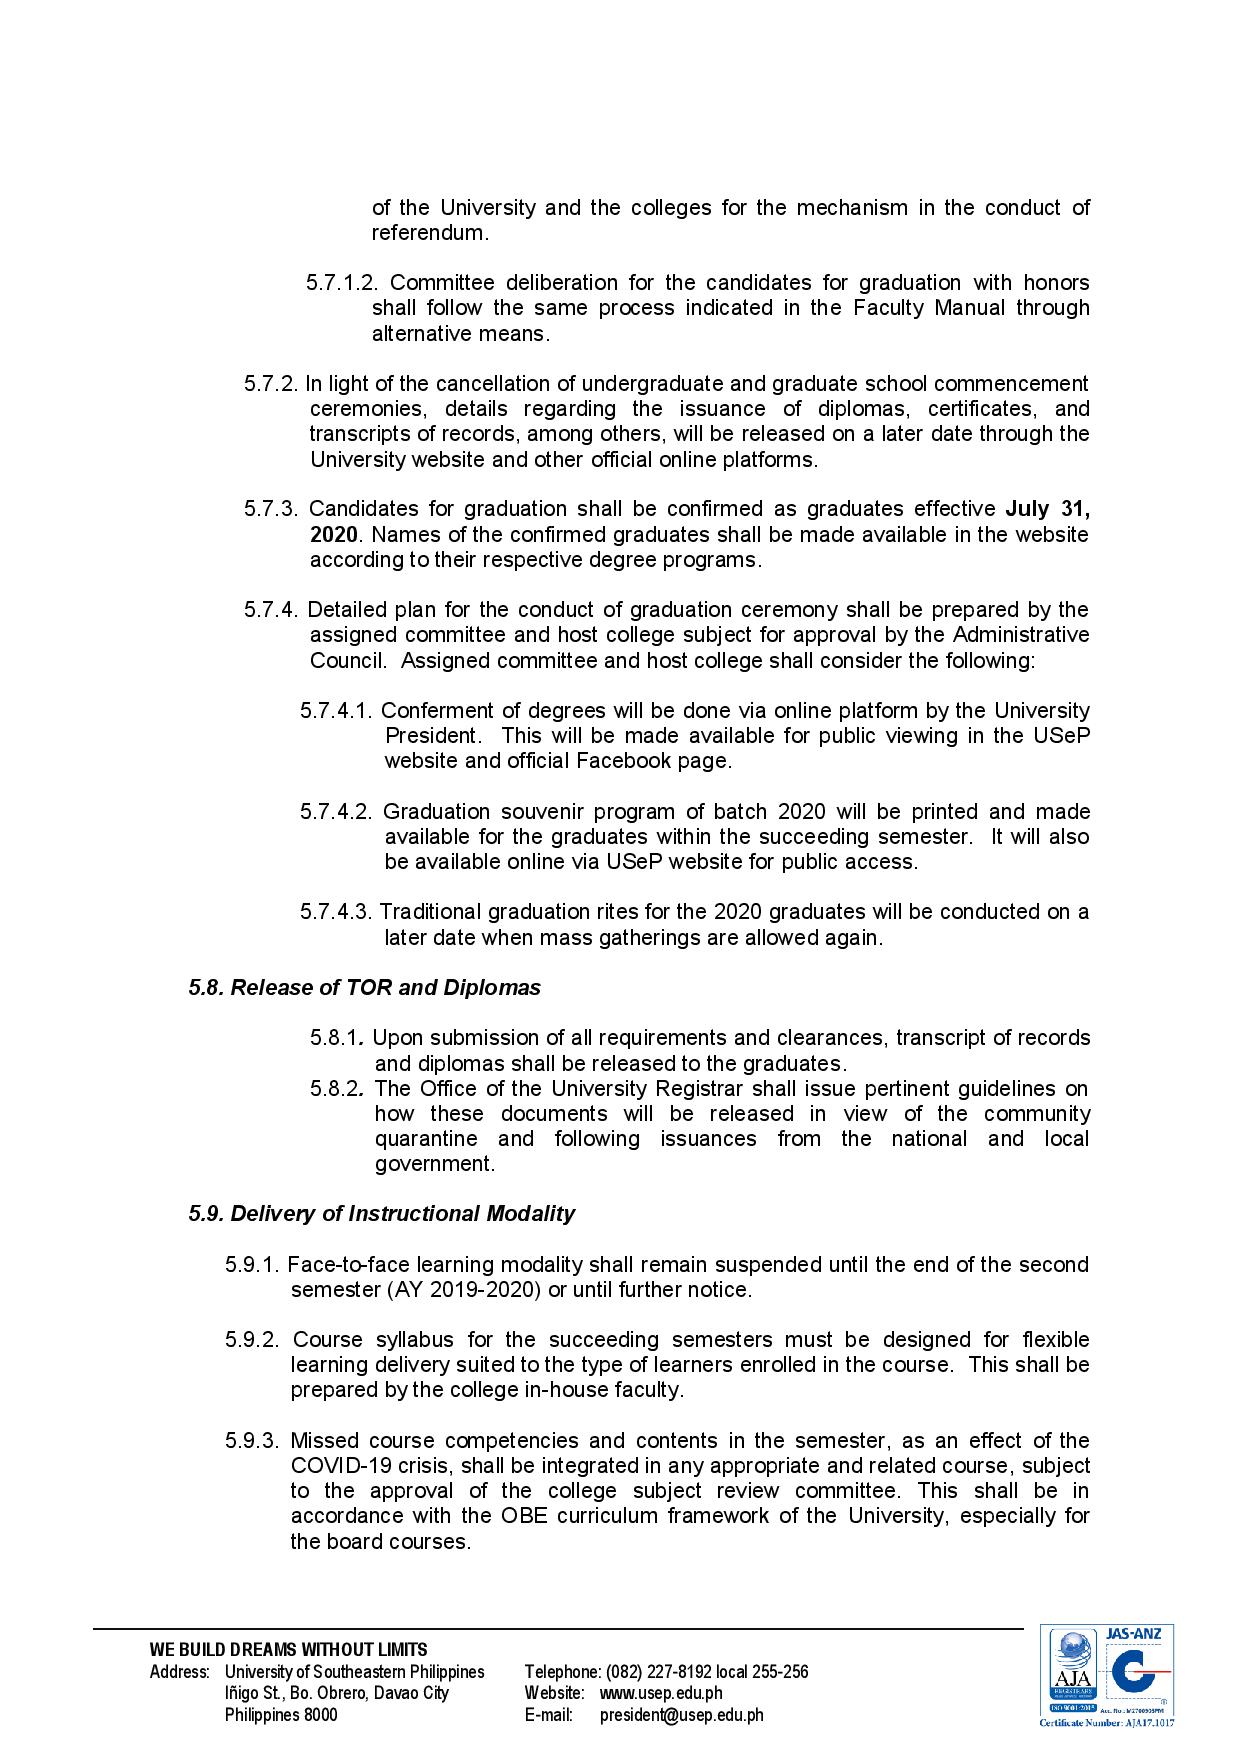 mc-02-s-2020-memorandum-circular-on-usep-academic-regulations-amidst-the-covid-19-pandemic-page-007